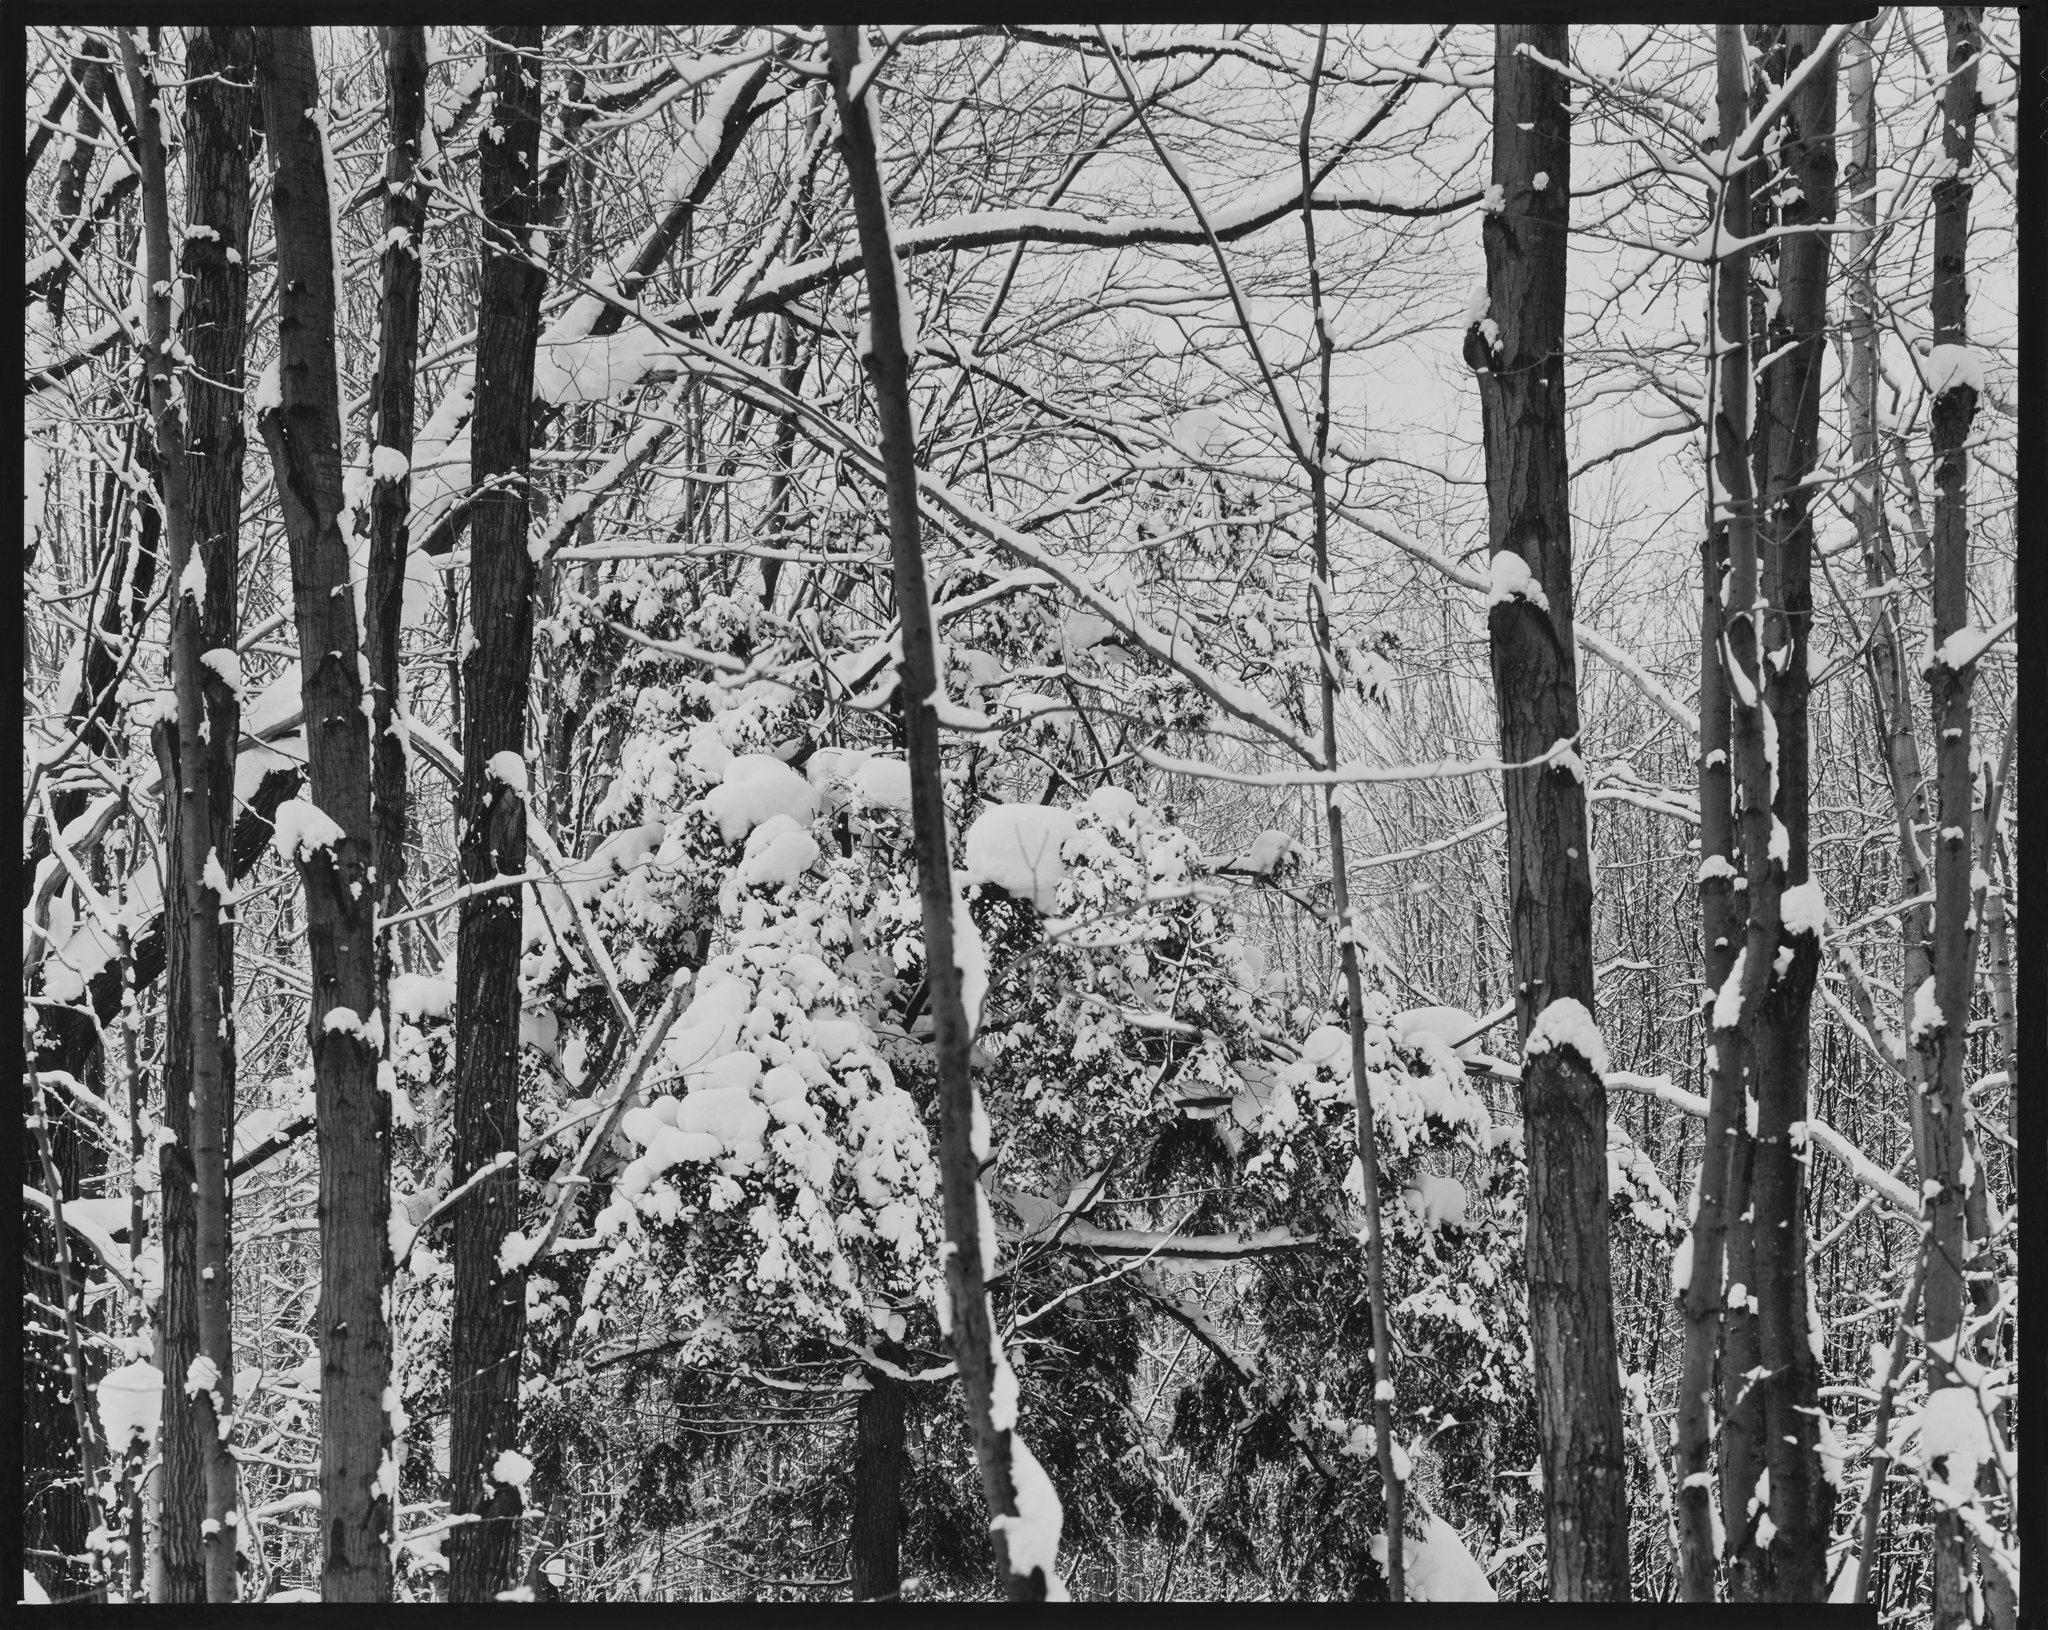 American Landscapes Portfolio_Winter Forest #6, Little Twin Lake, Michigan_1981 © Nick Merrick.jpg